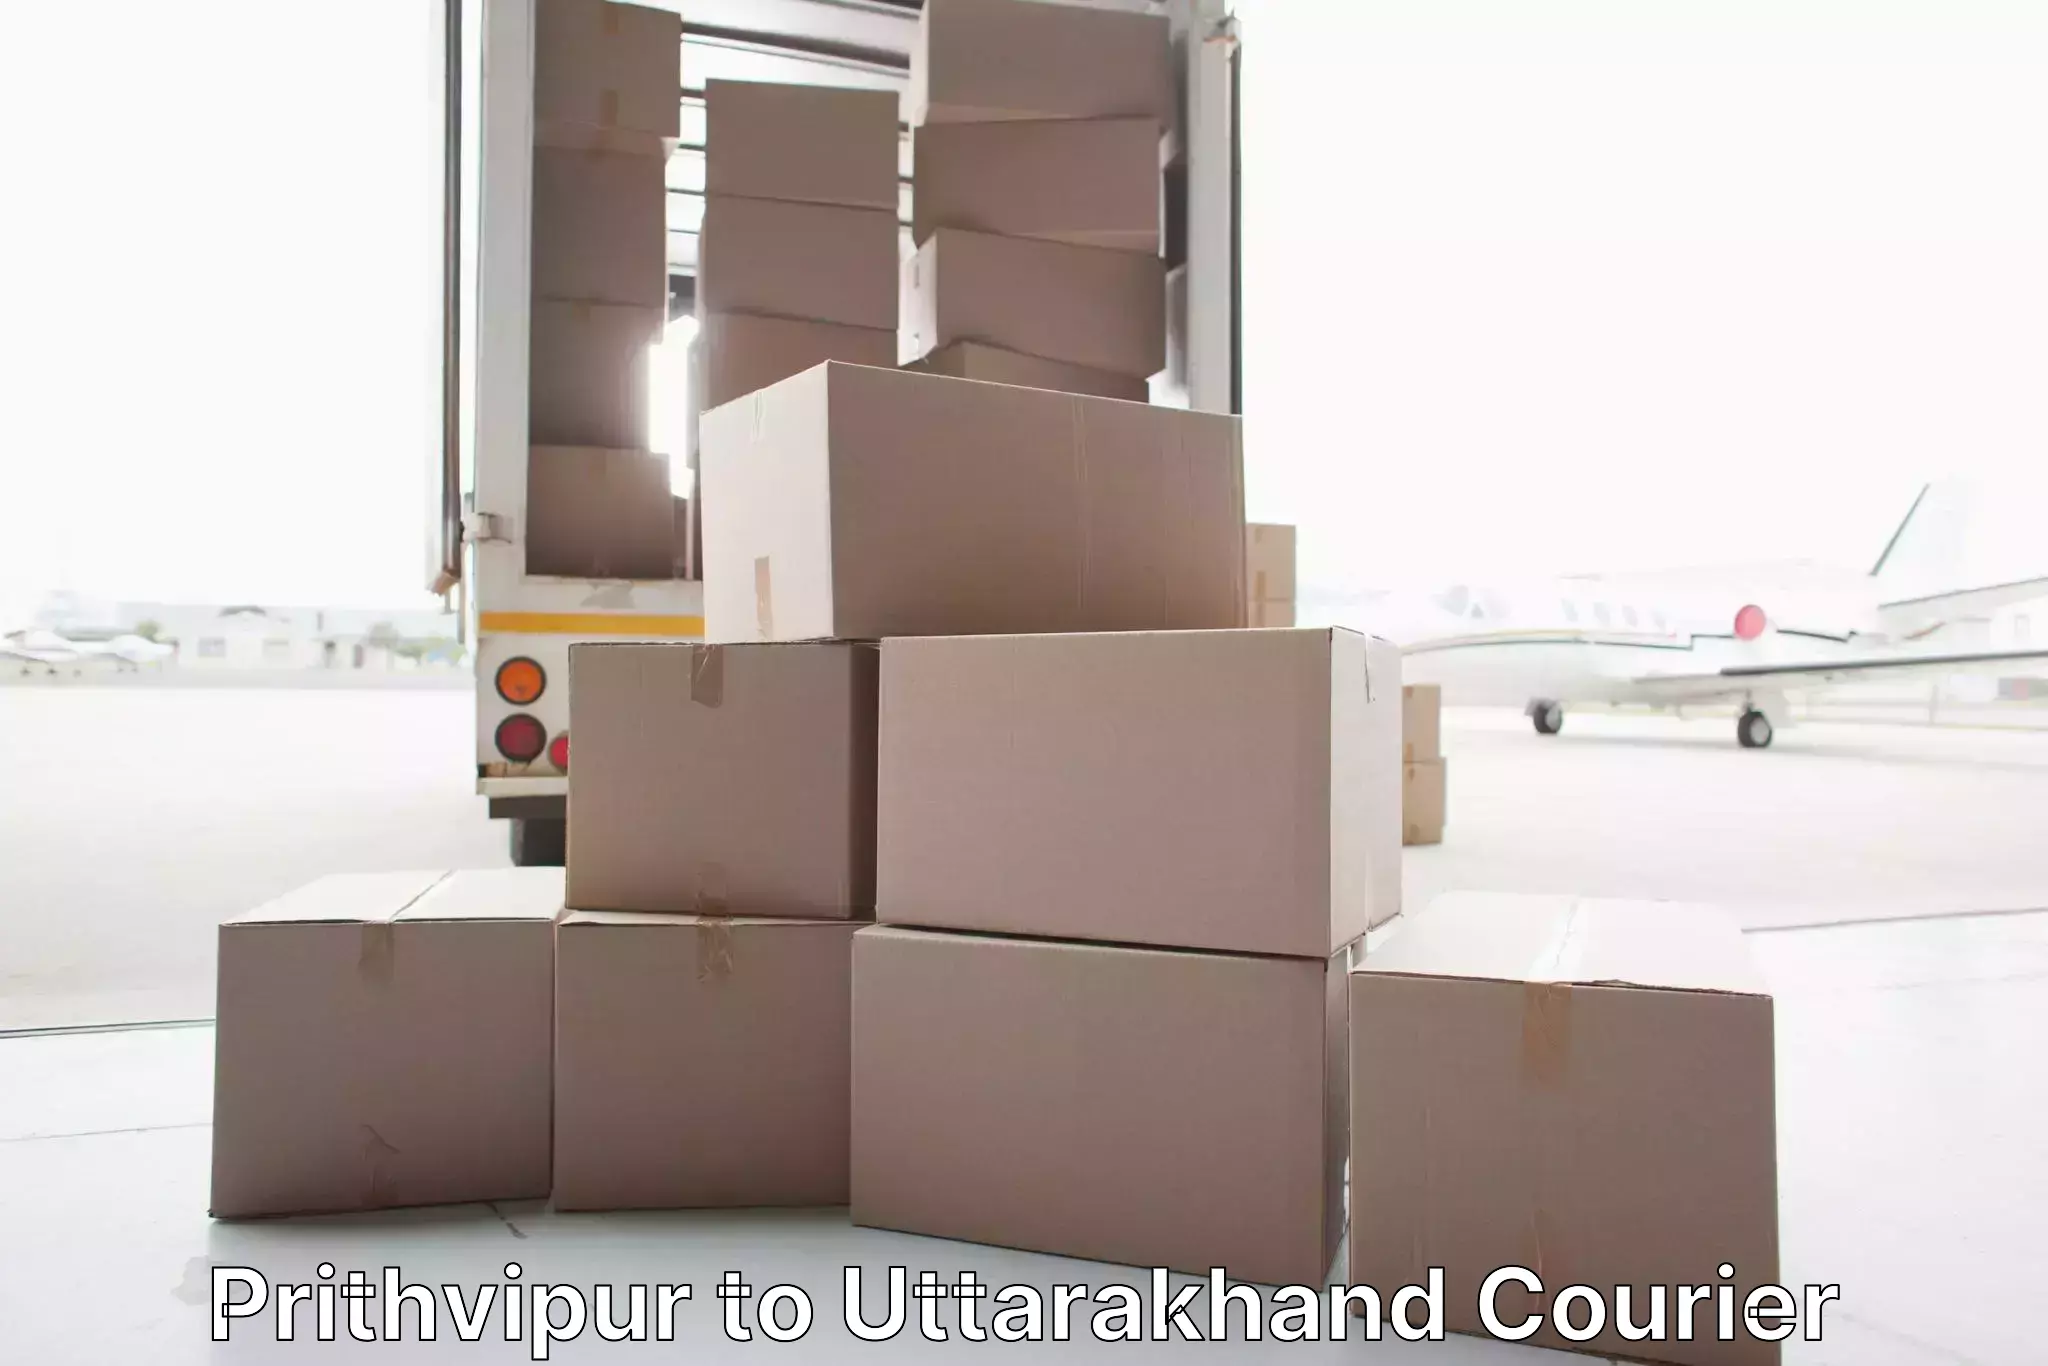 Furniture moving experts Prithvipur to Bageshwar